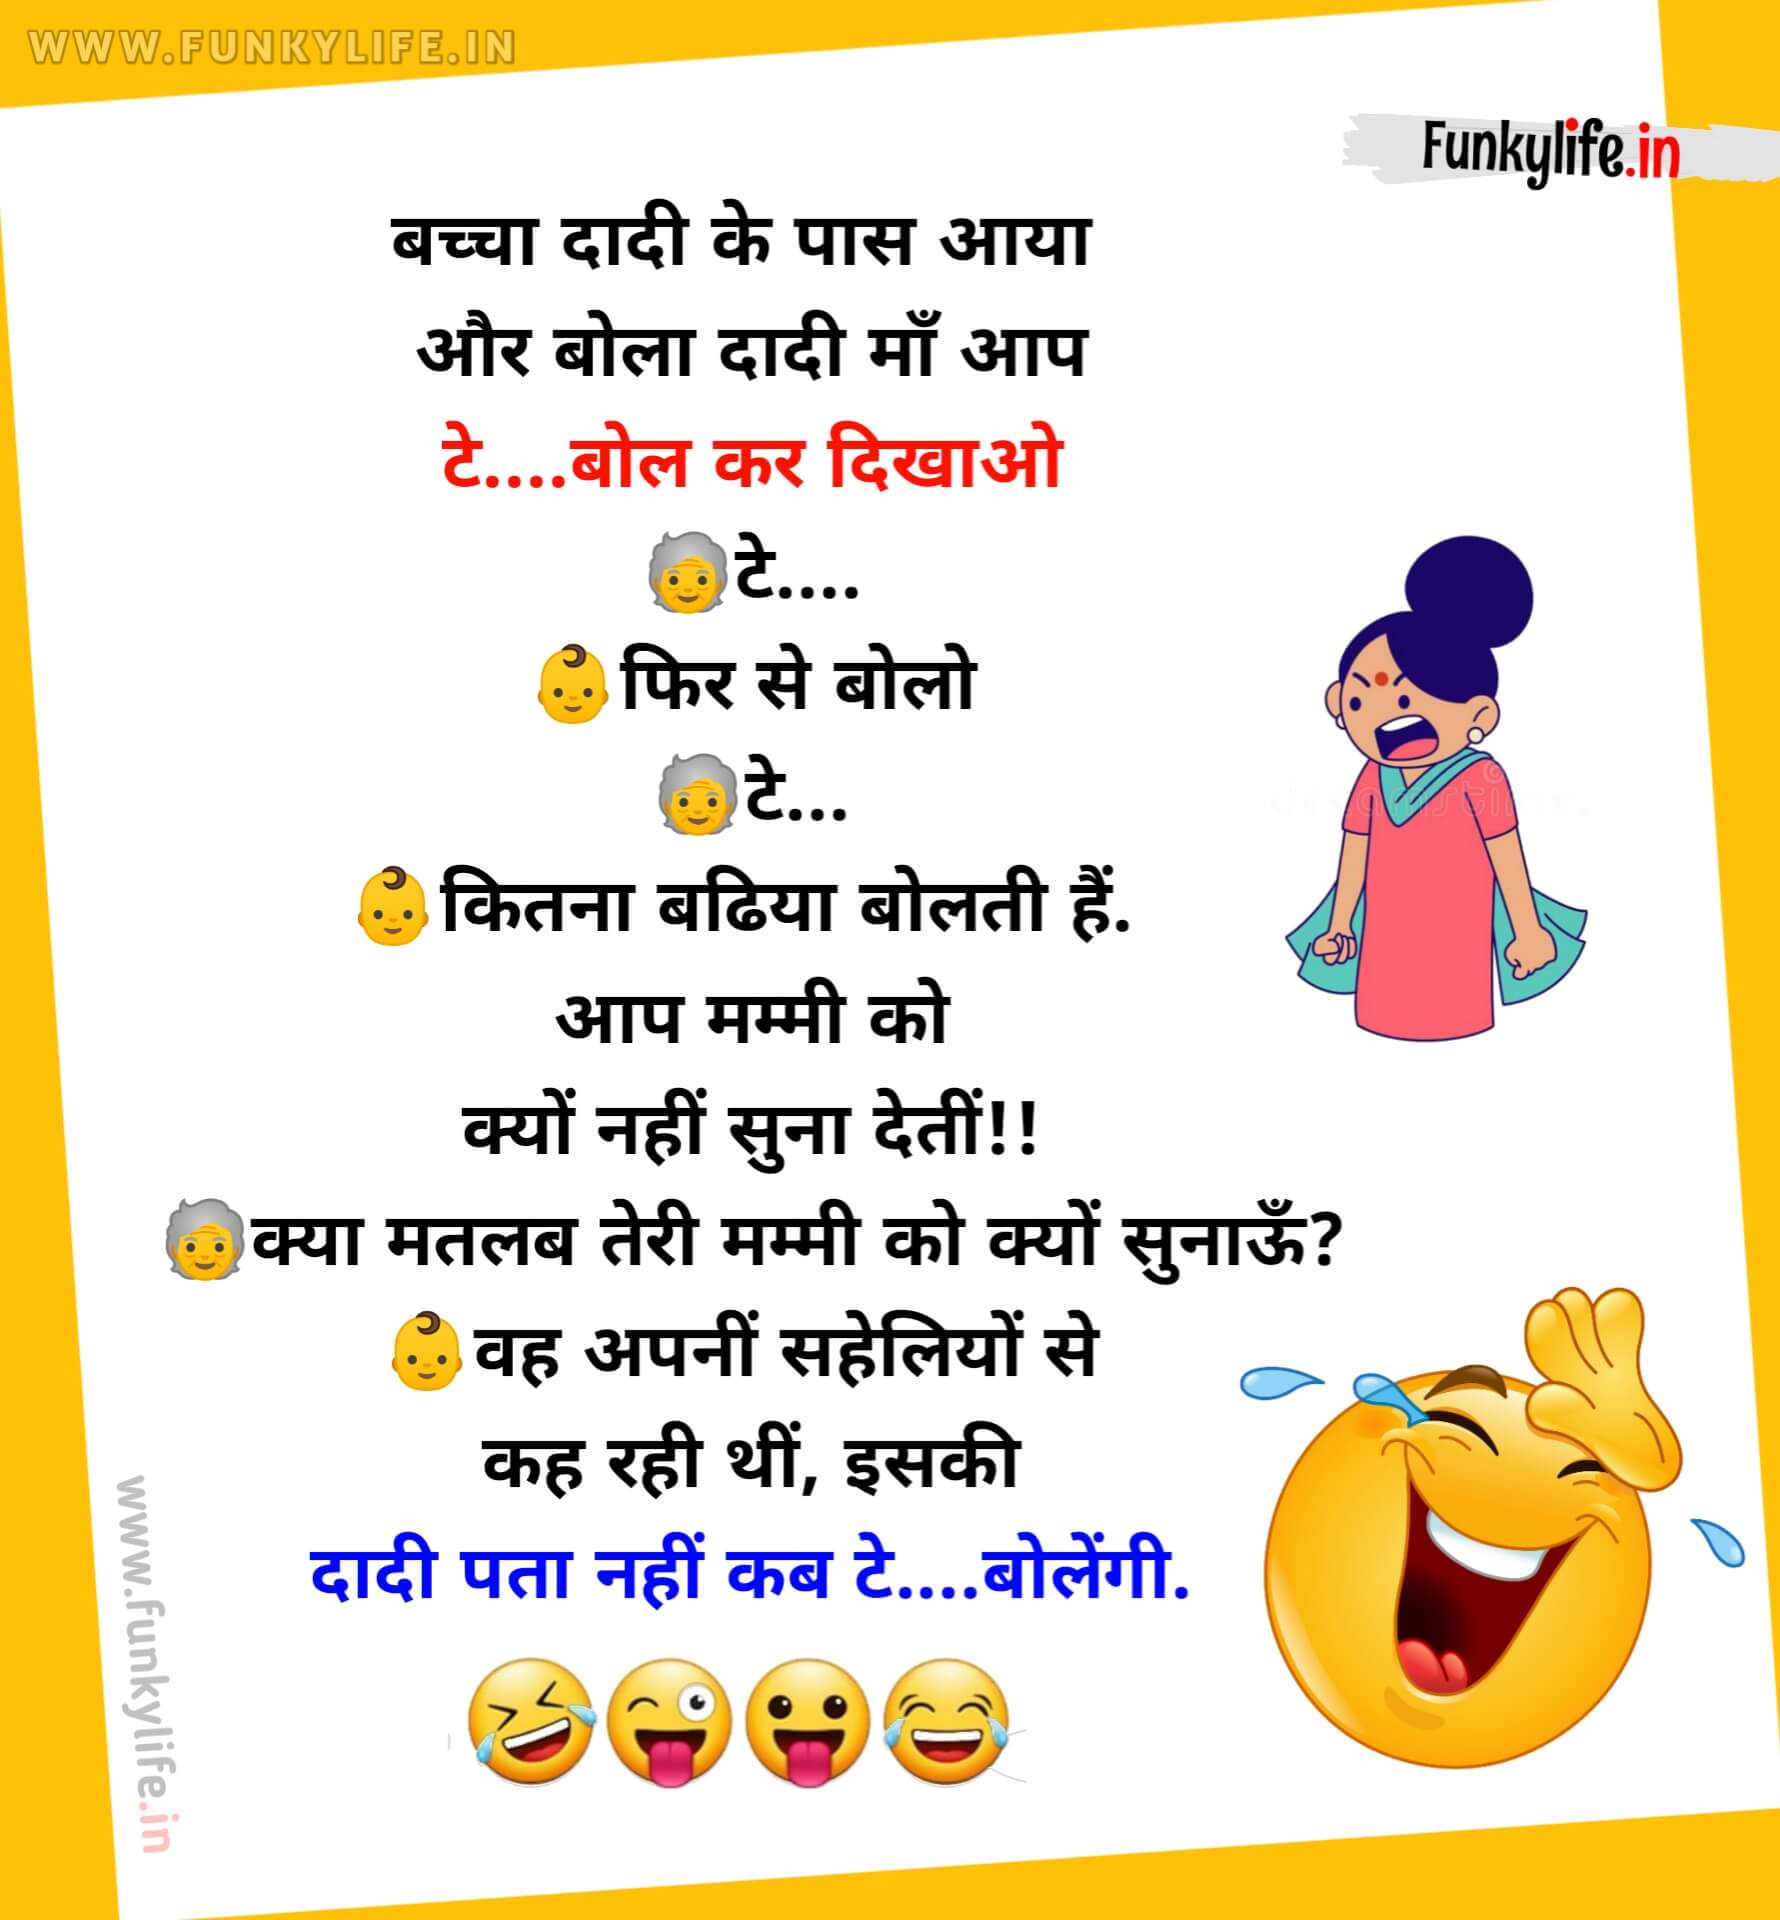 Whatsapp Jokes In Hindi | 110+ Best व्हाट्सएप चुटकुले, Funny Jokes